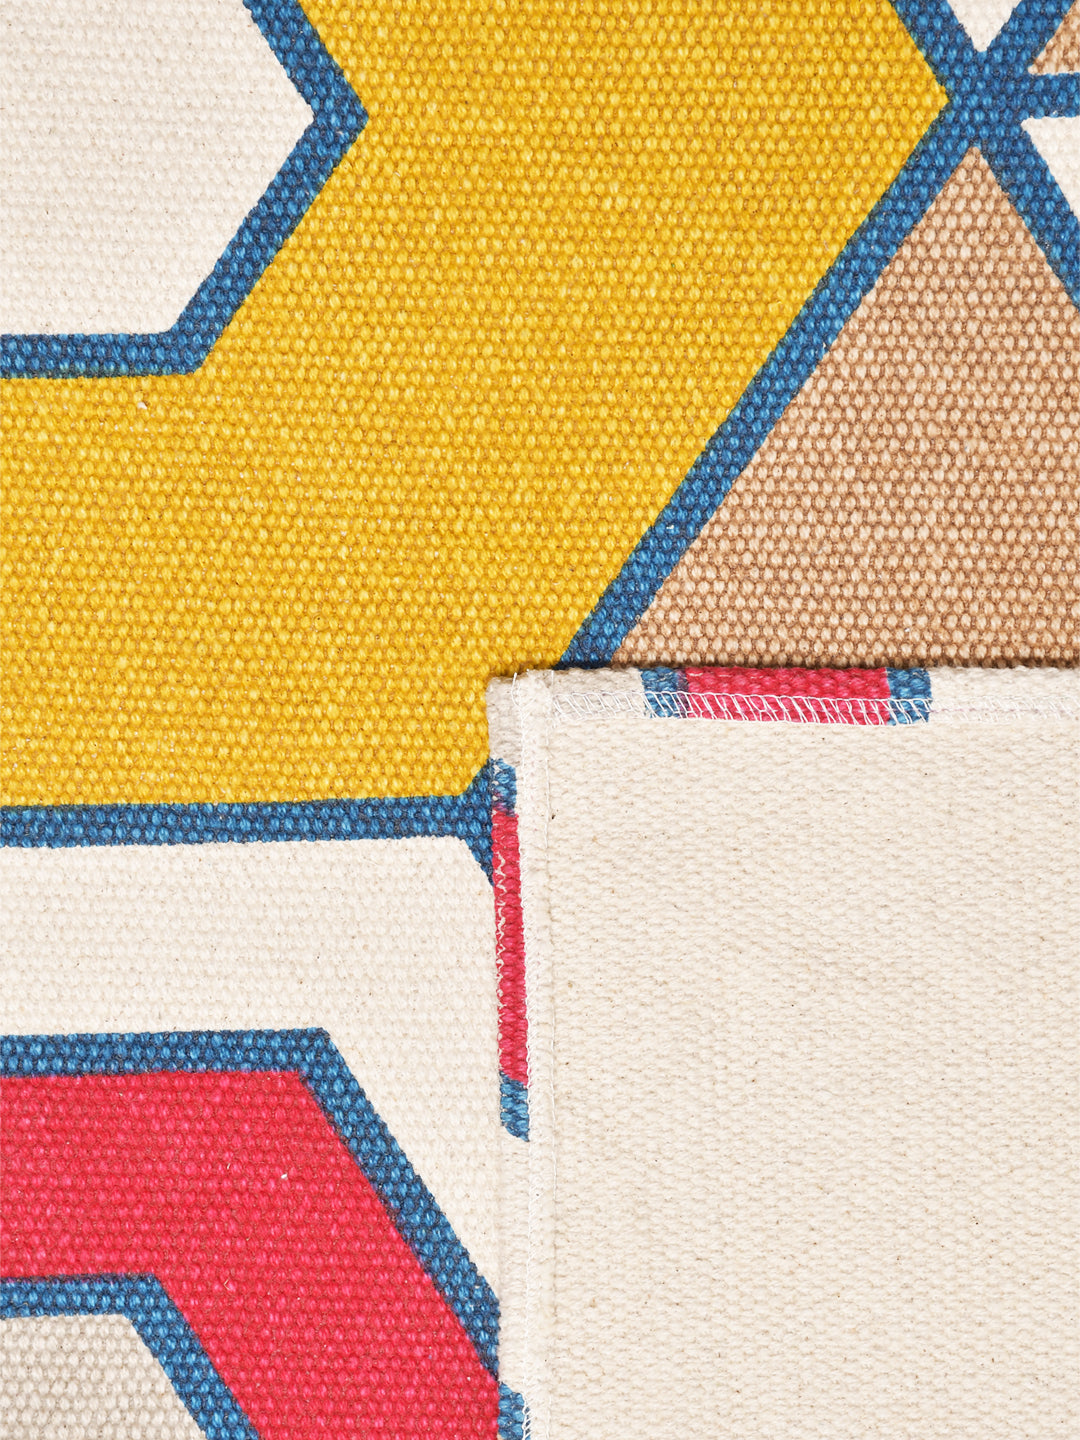 Blanc9 Honeycomb Yellow 4'x5.5' Printed Cotton Carpet